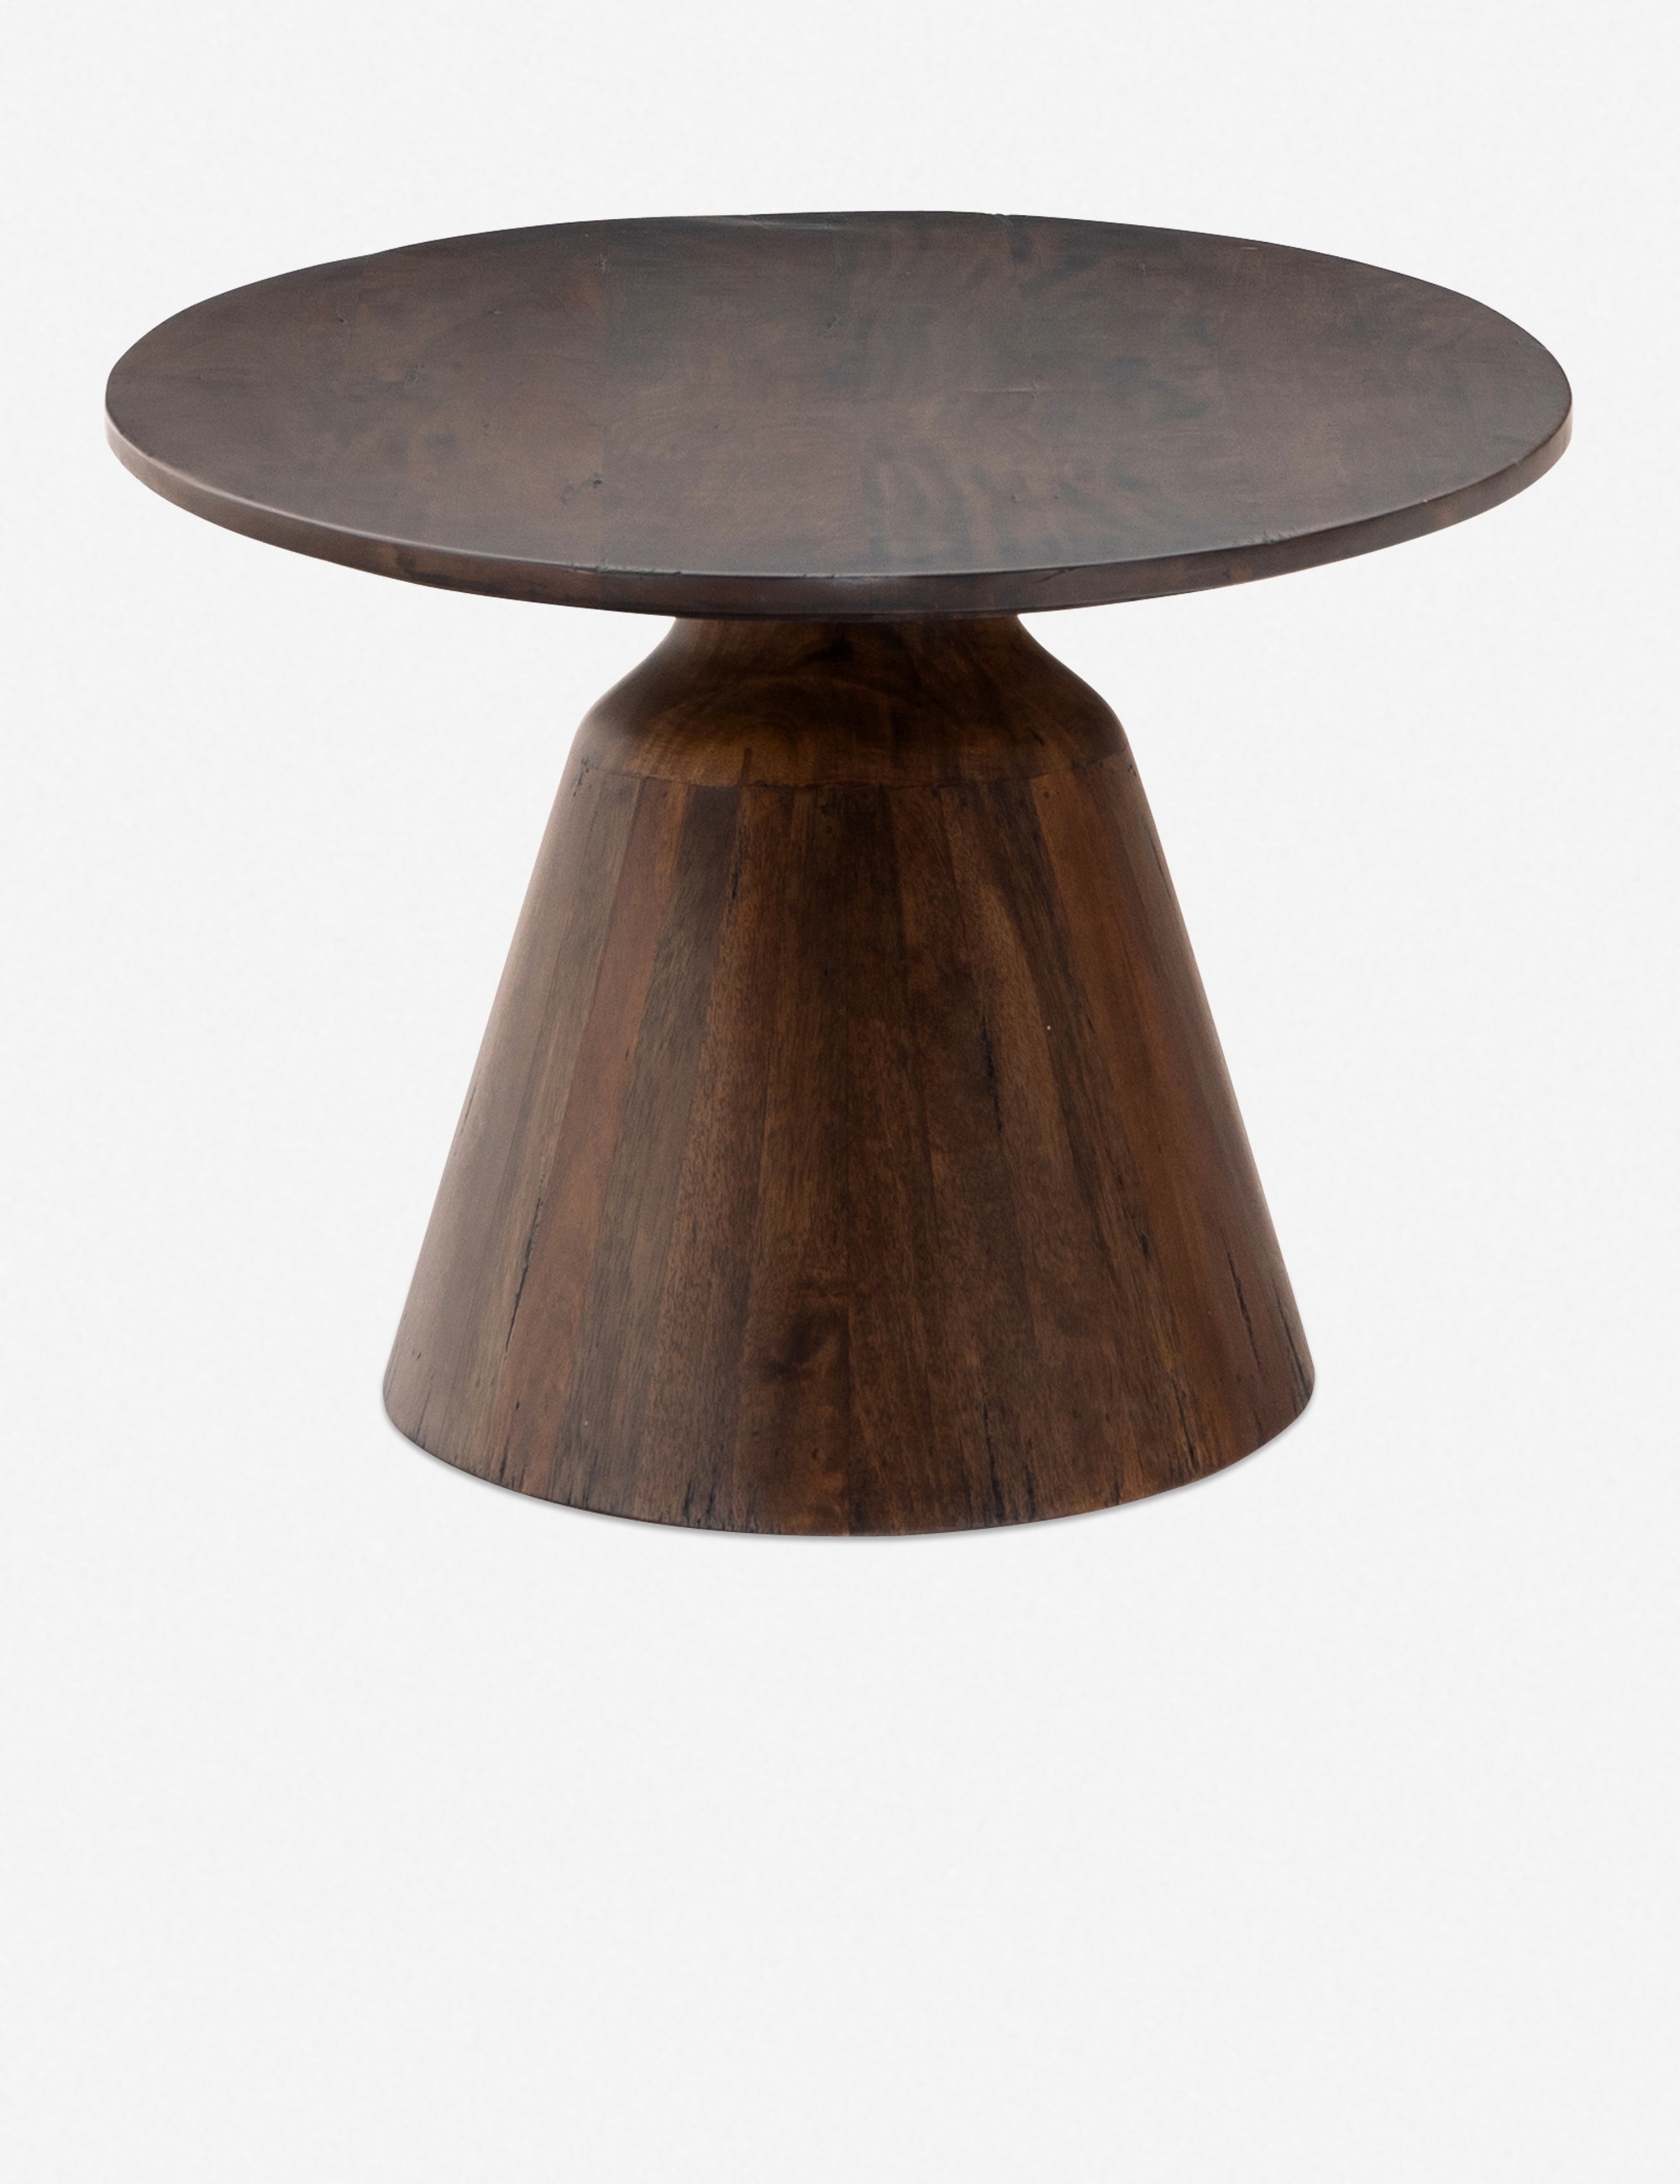 Armand Oval Coffee Table - Image 2